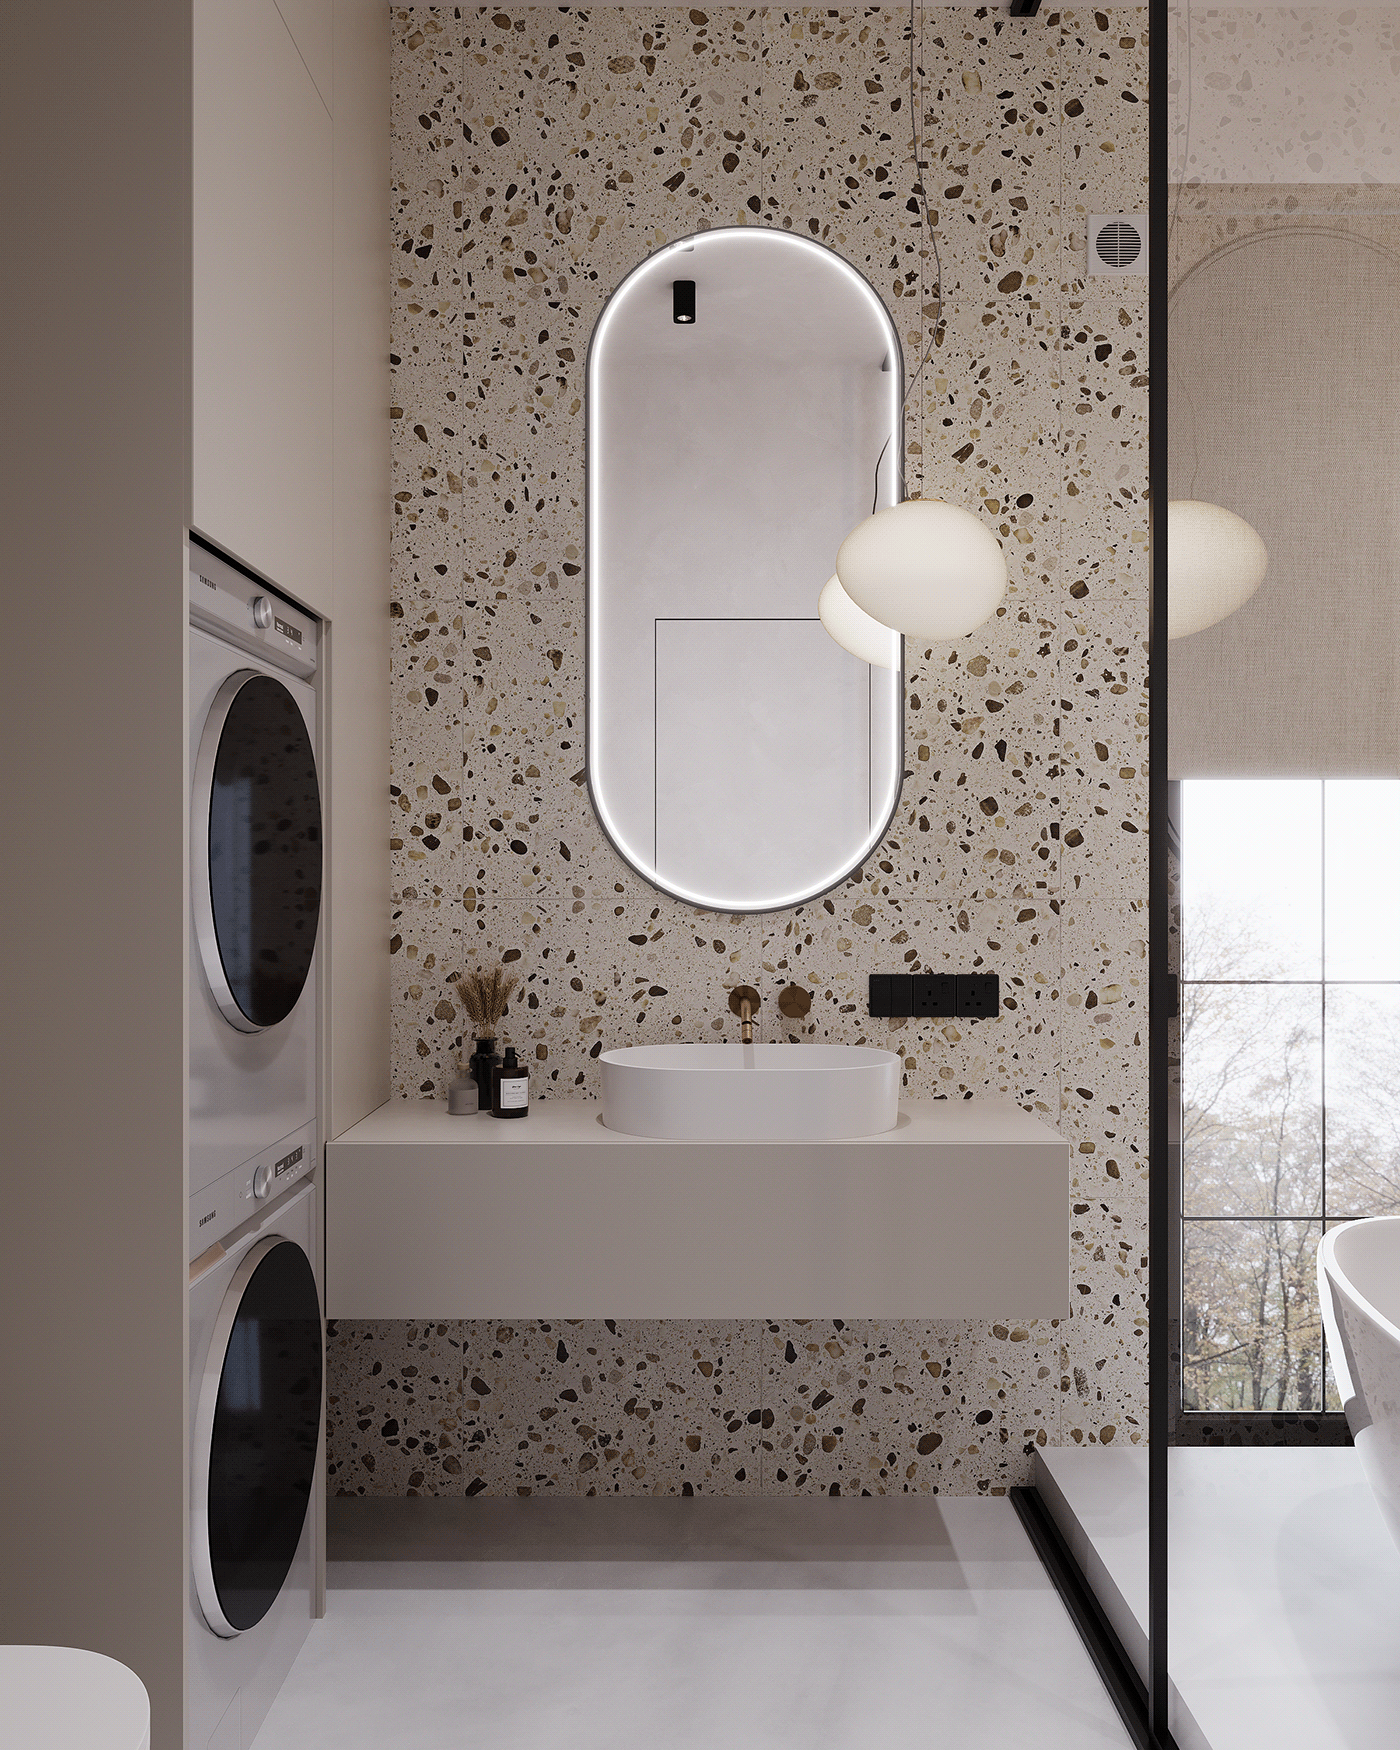 3ds max architecture visualization interior design  Render Adobe Photoshop designer bedroom design bathroom design Interior